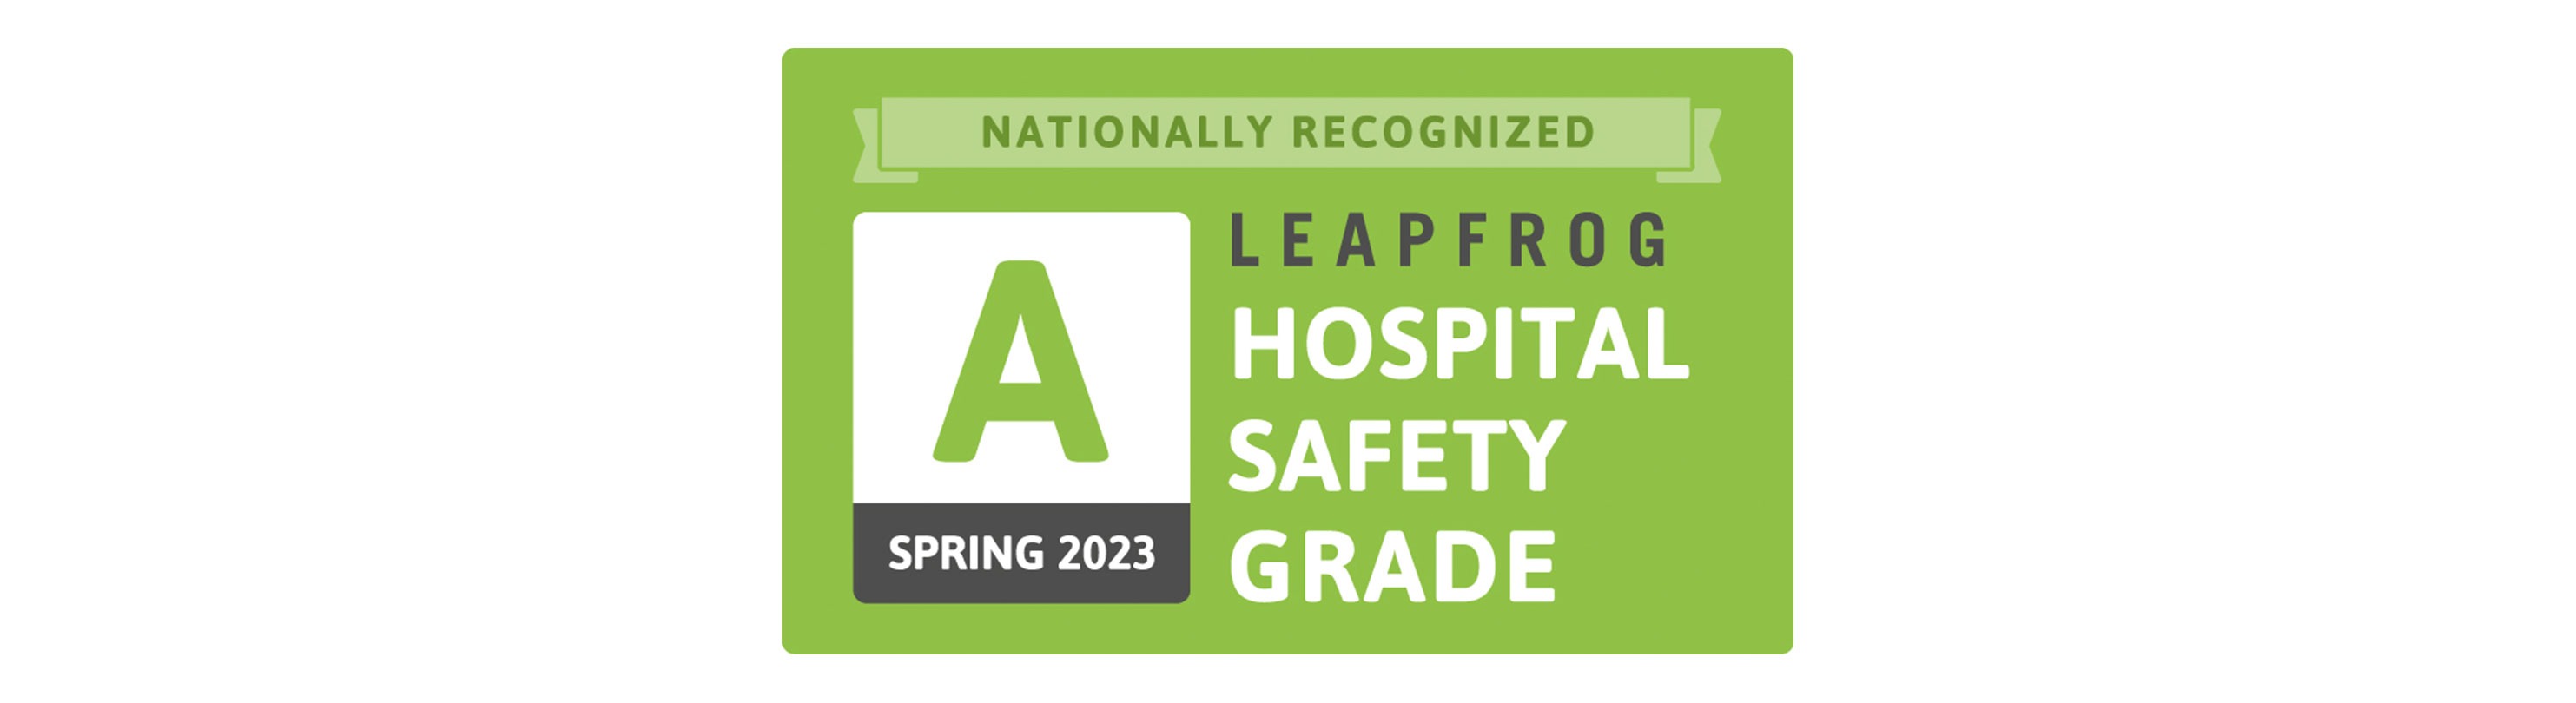 Hartford Hospital Awarded Spring 2023 ‘A’ Hospital Safety Grade From Leapfrog Group